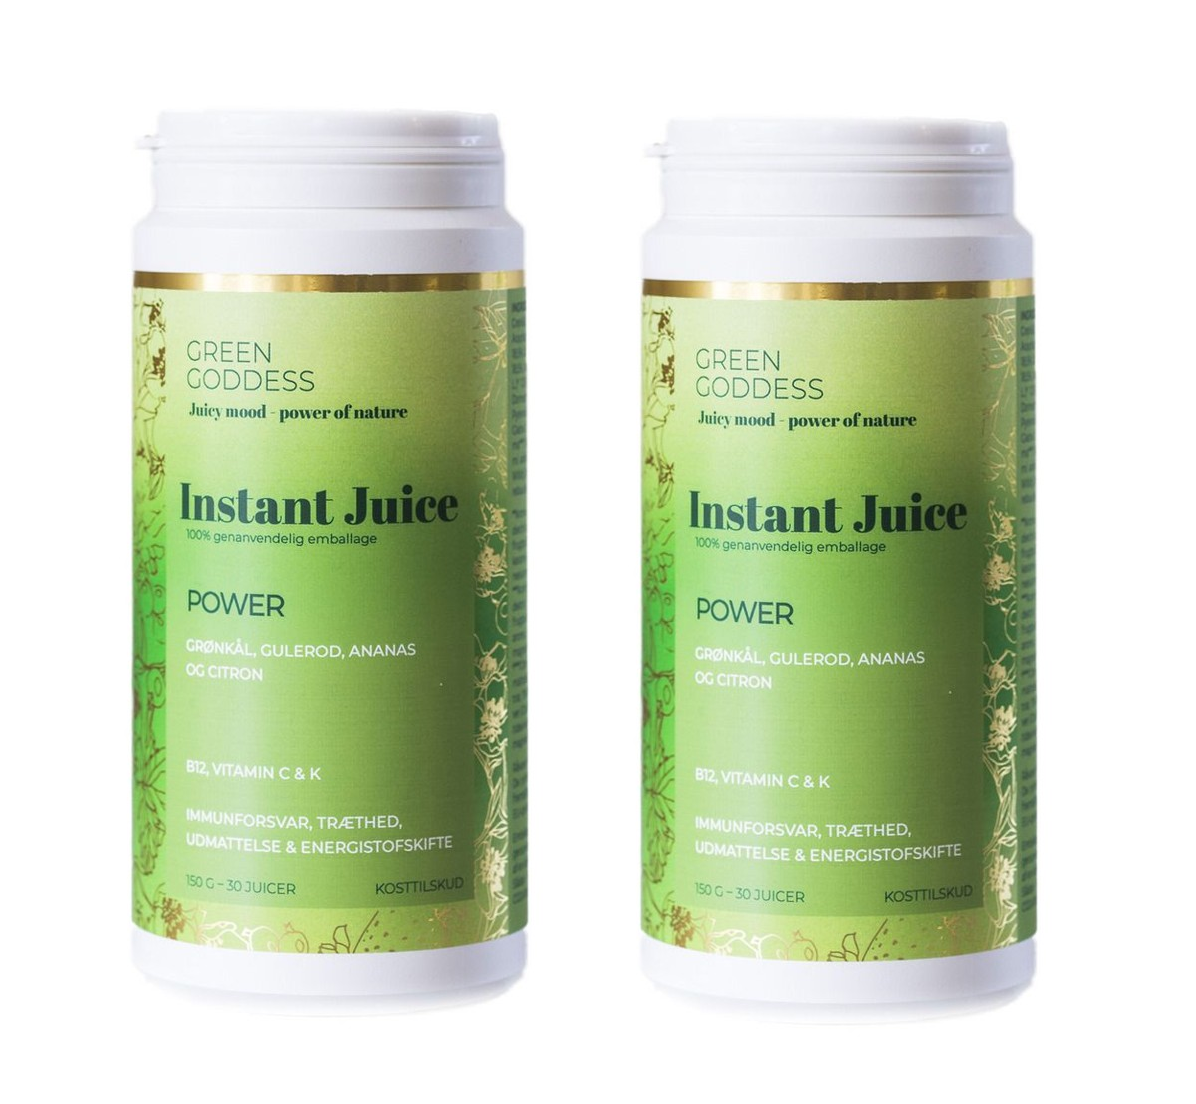 Green Goddess - 2 x Power Instant Juice 150 g